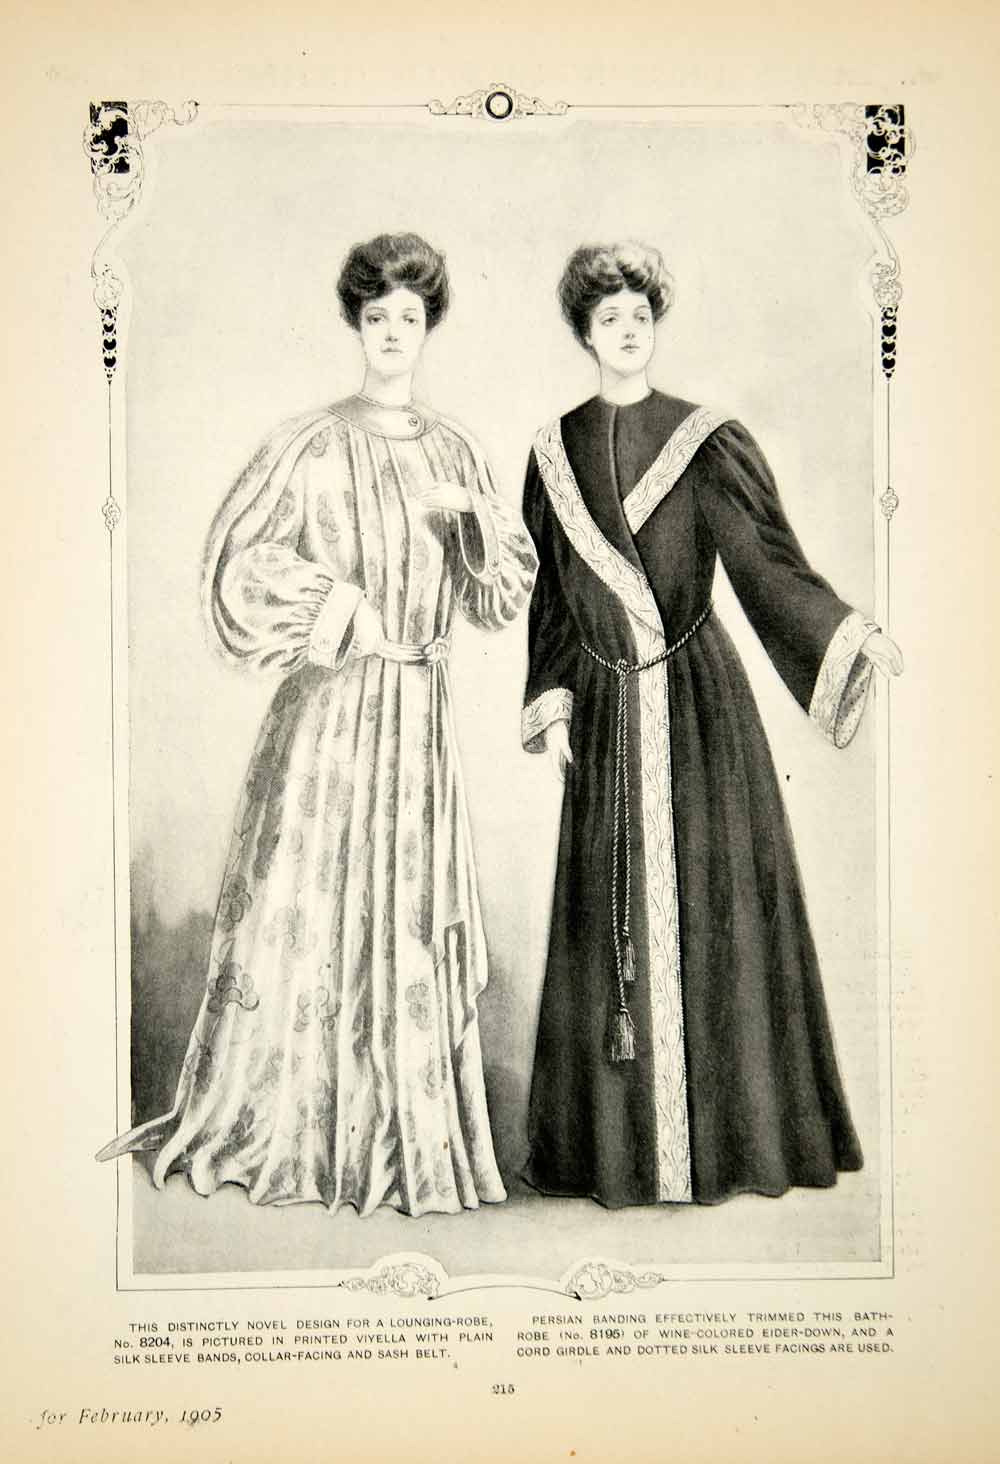 1929 Article Art Deco Women Corset Twenties Era Fashion Clothing